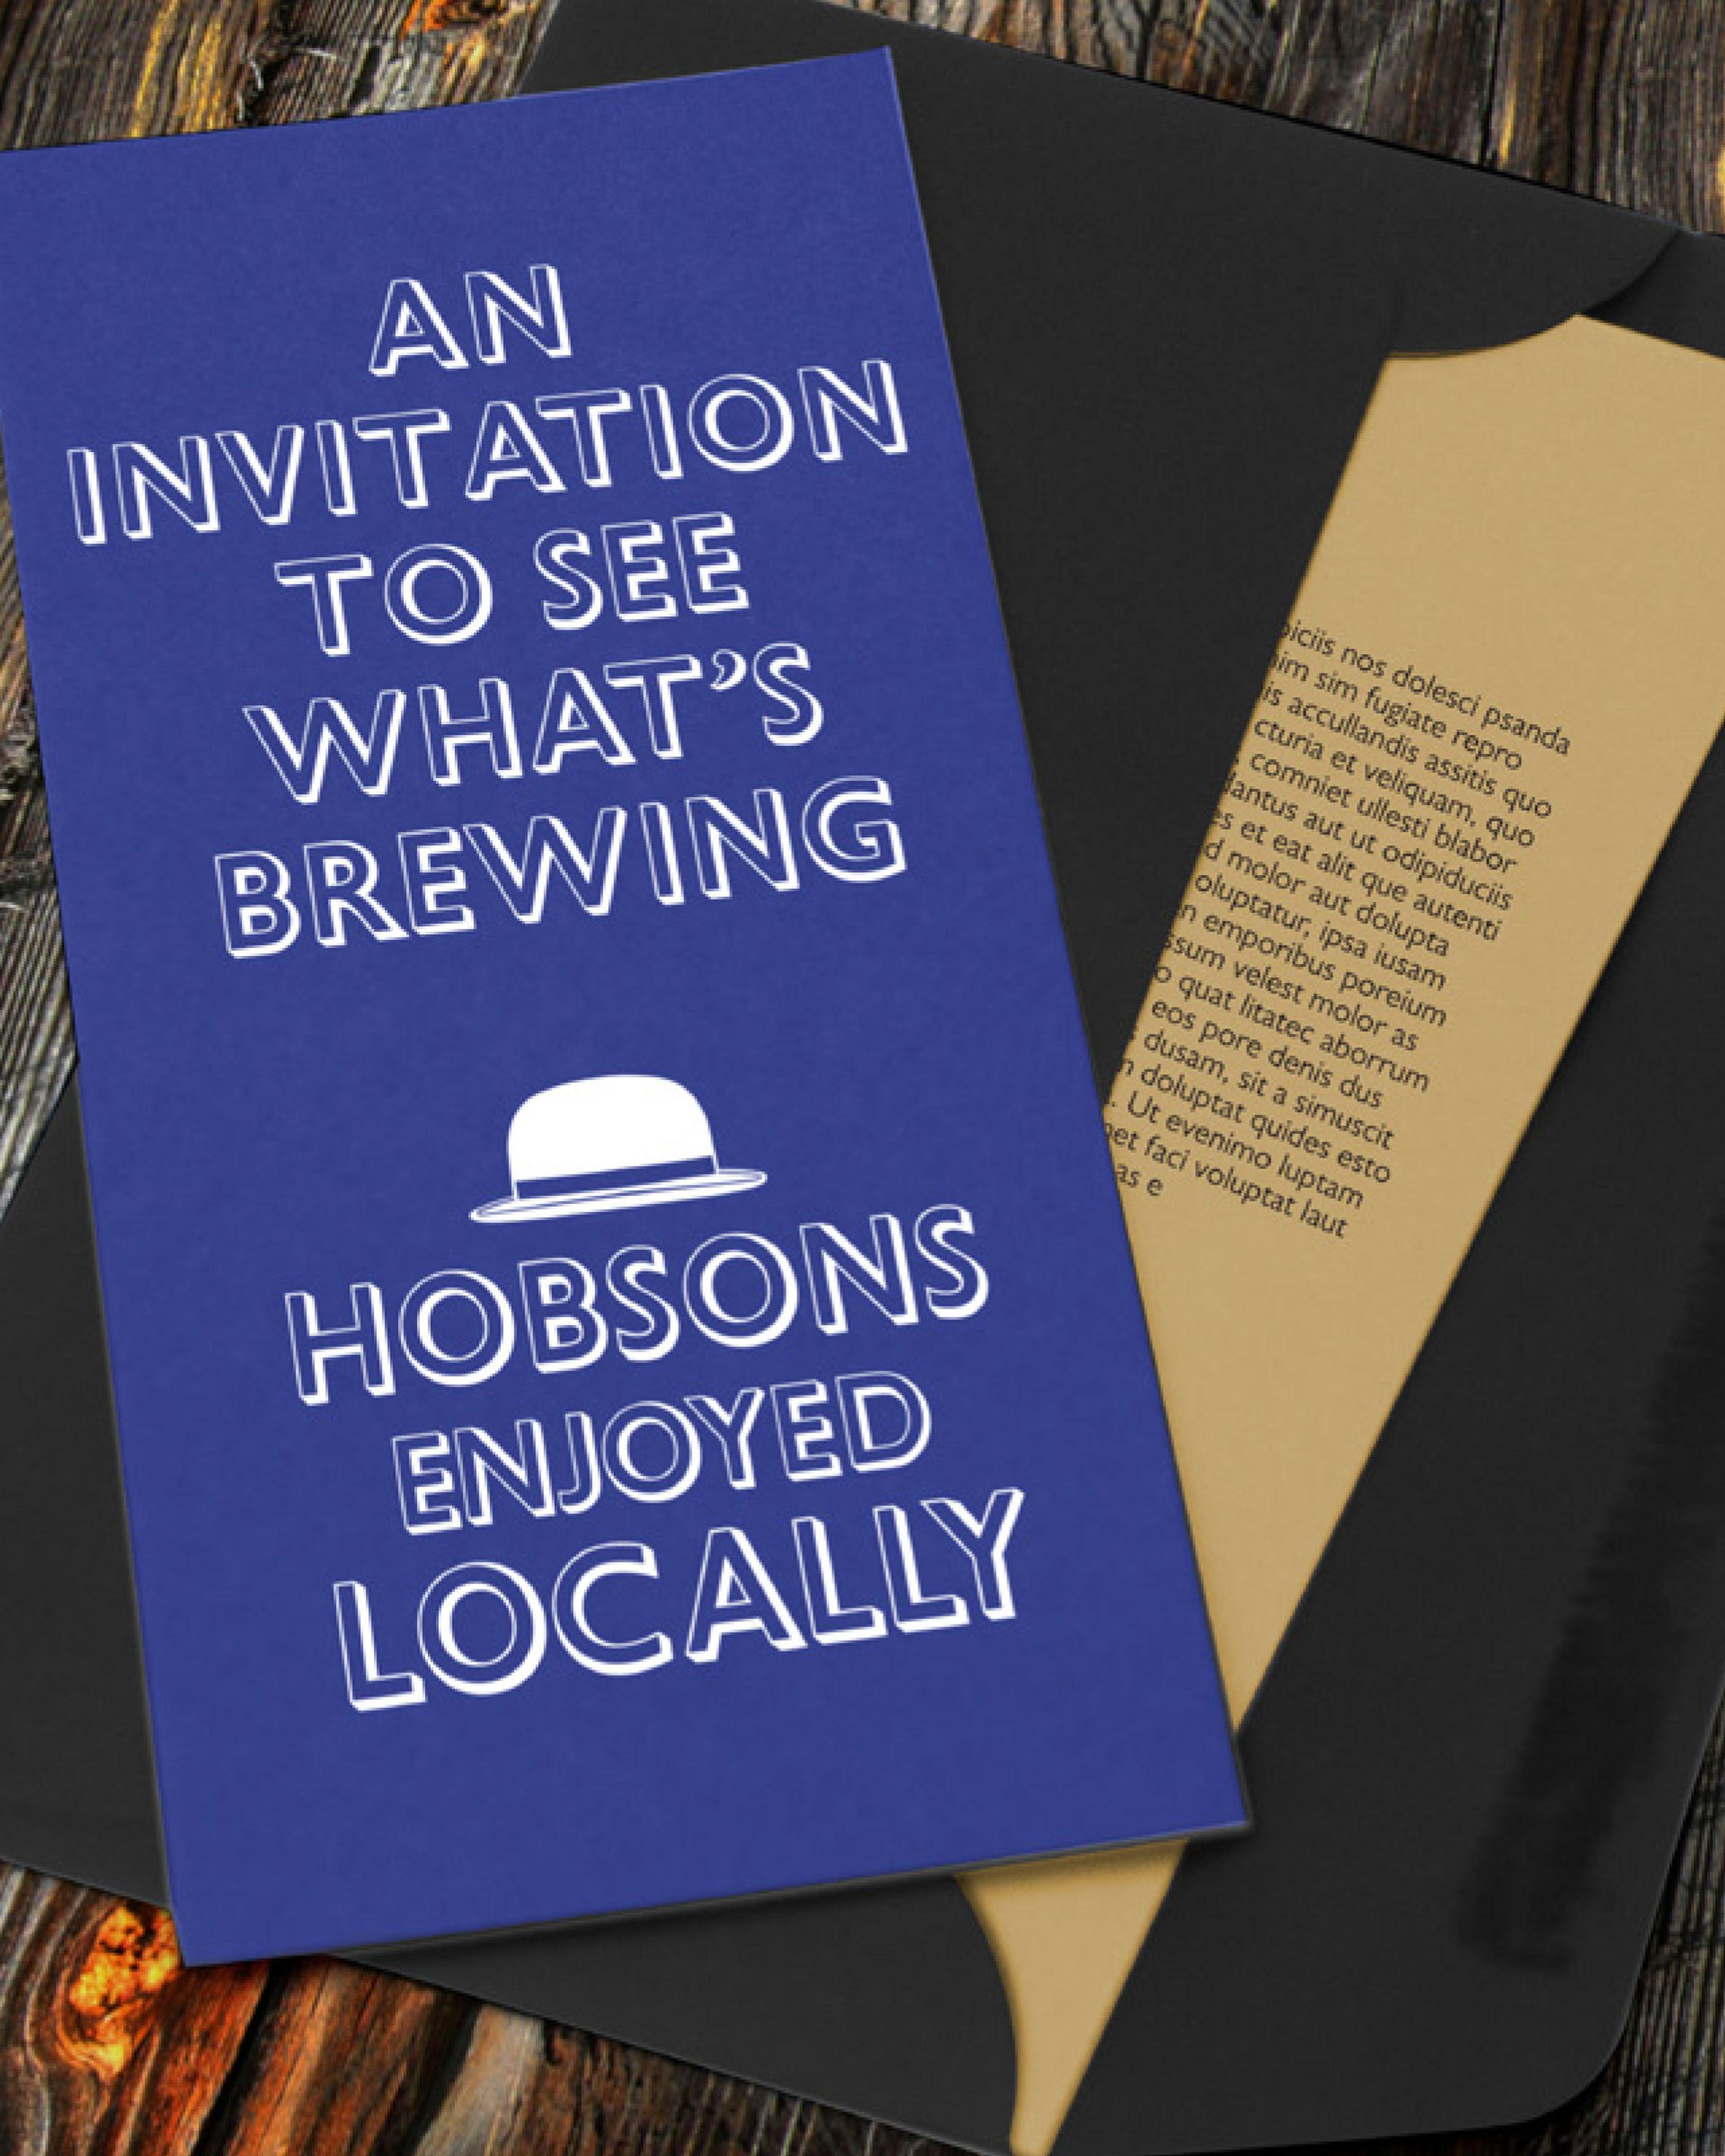 Hobsons Invite